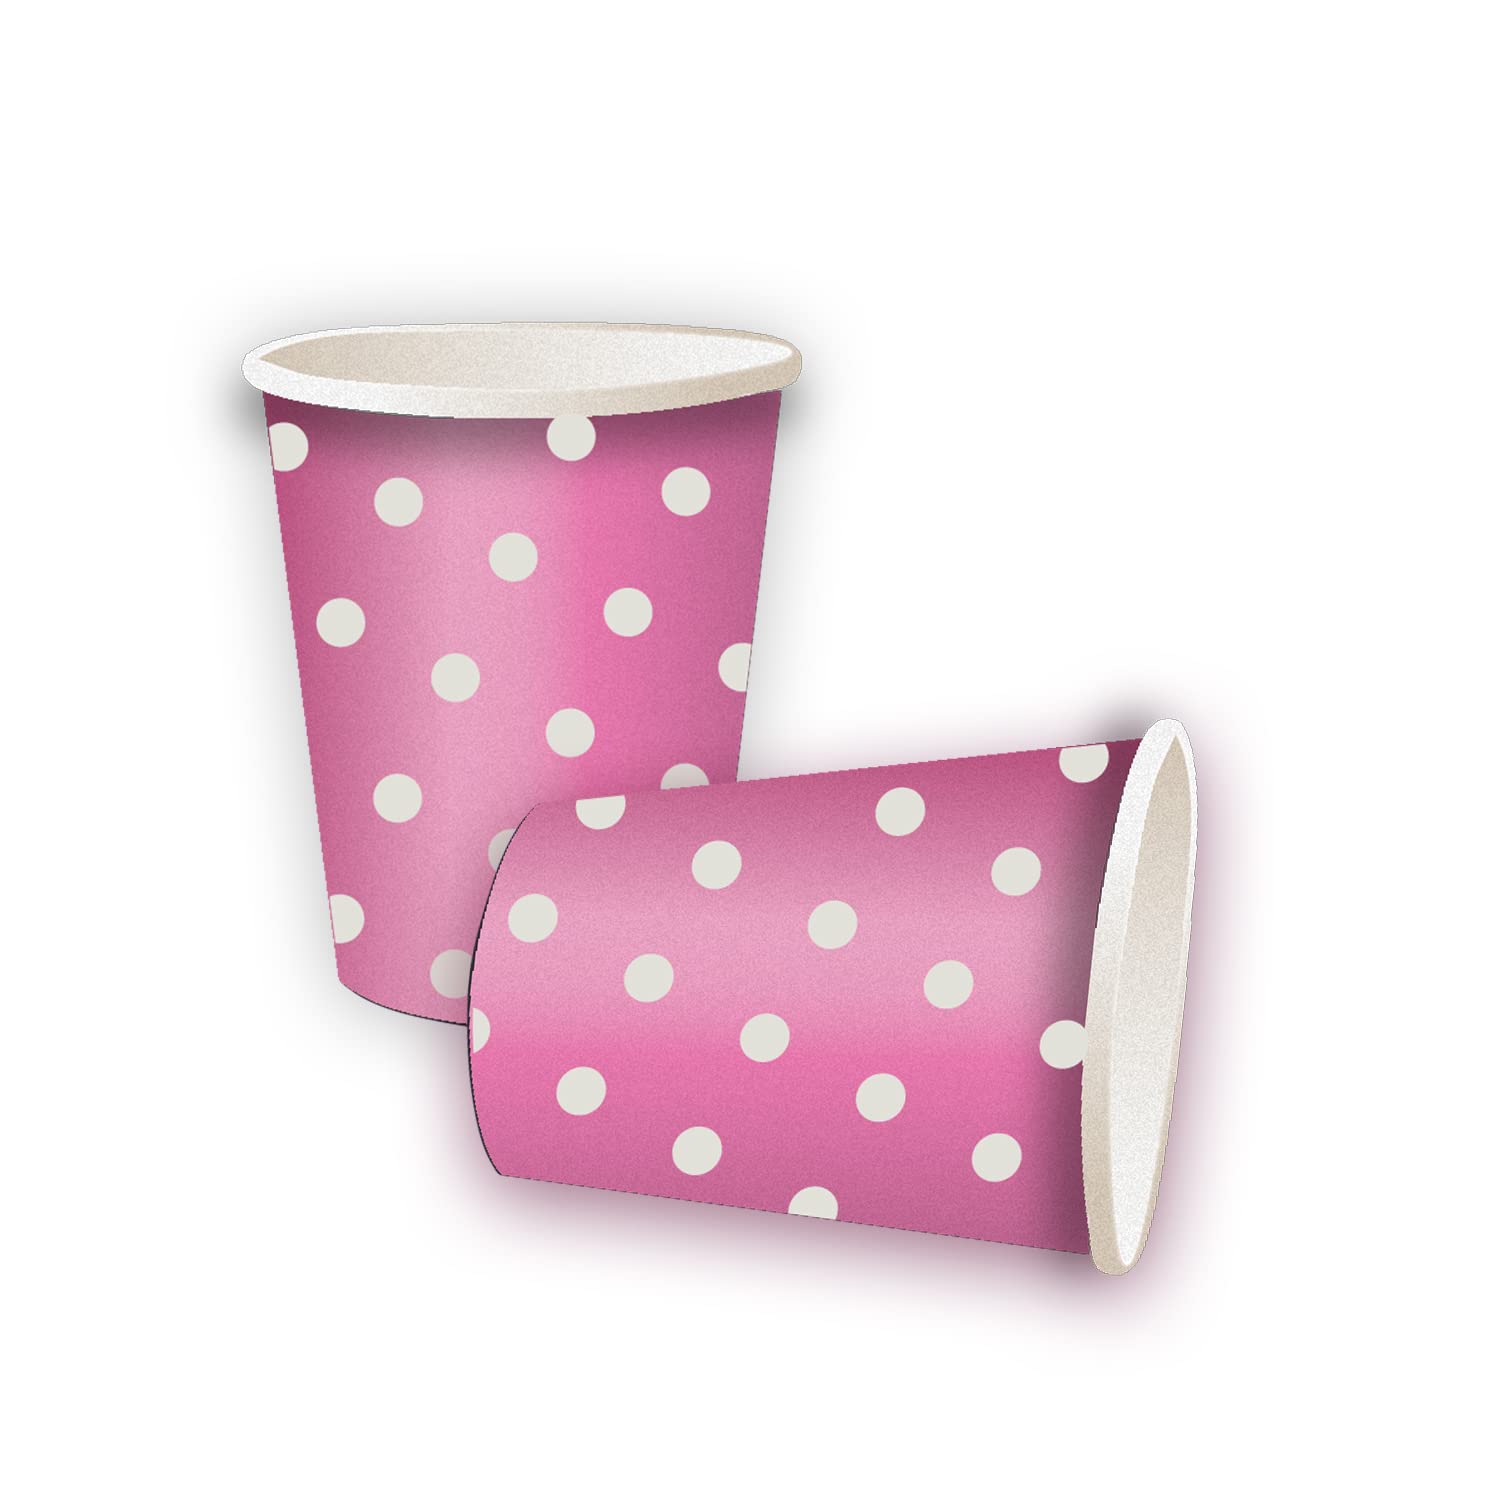 Custom Printed Paper Cups